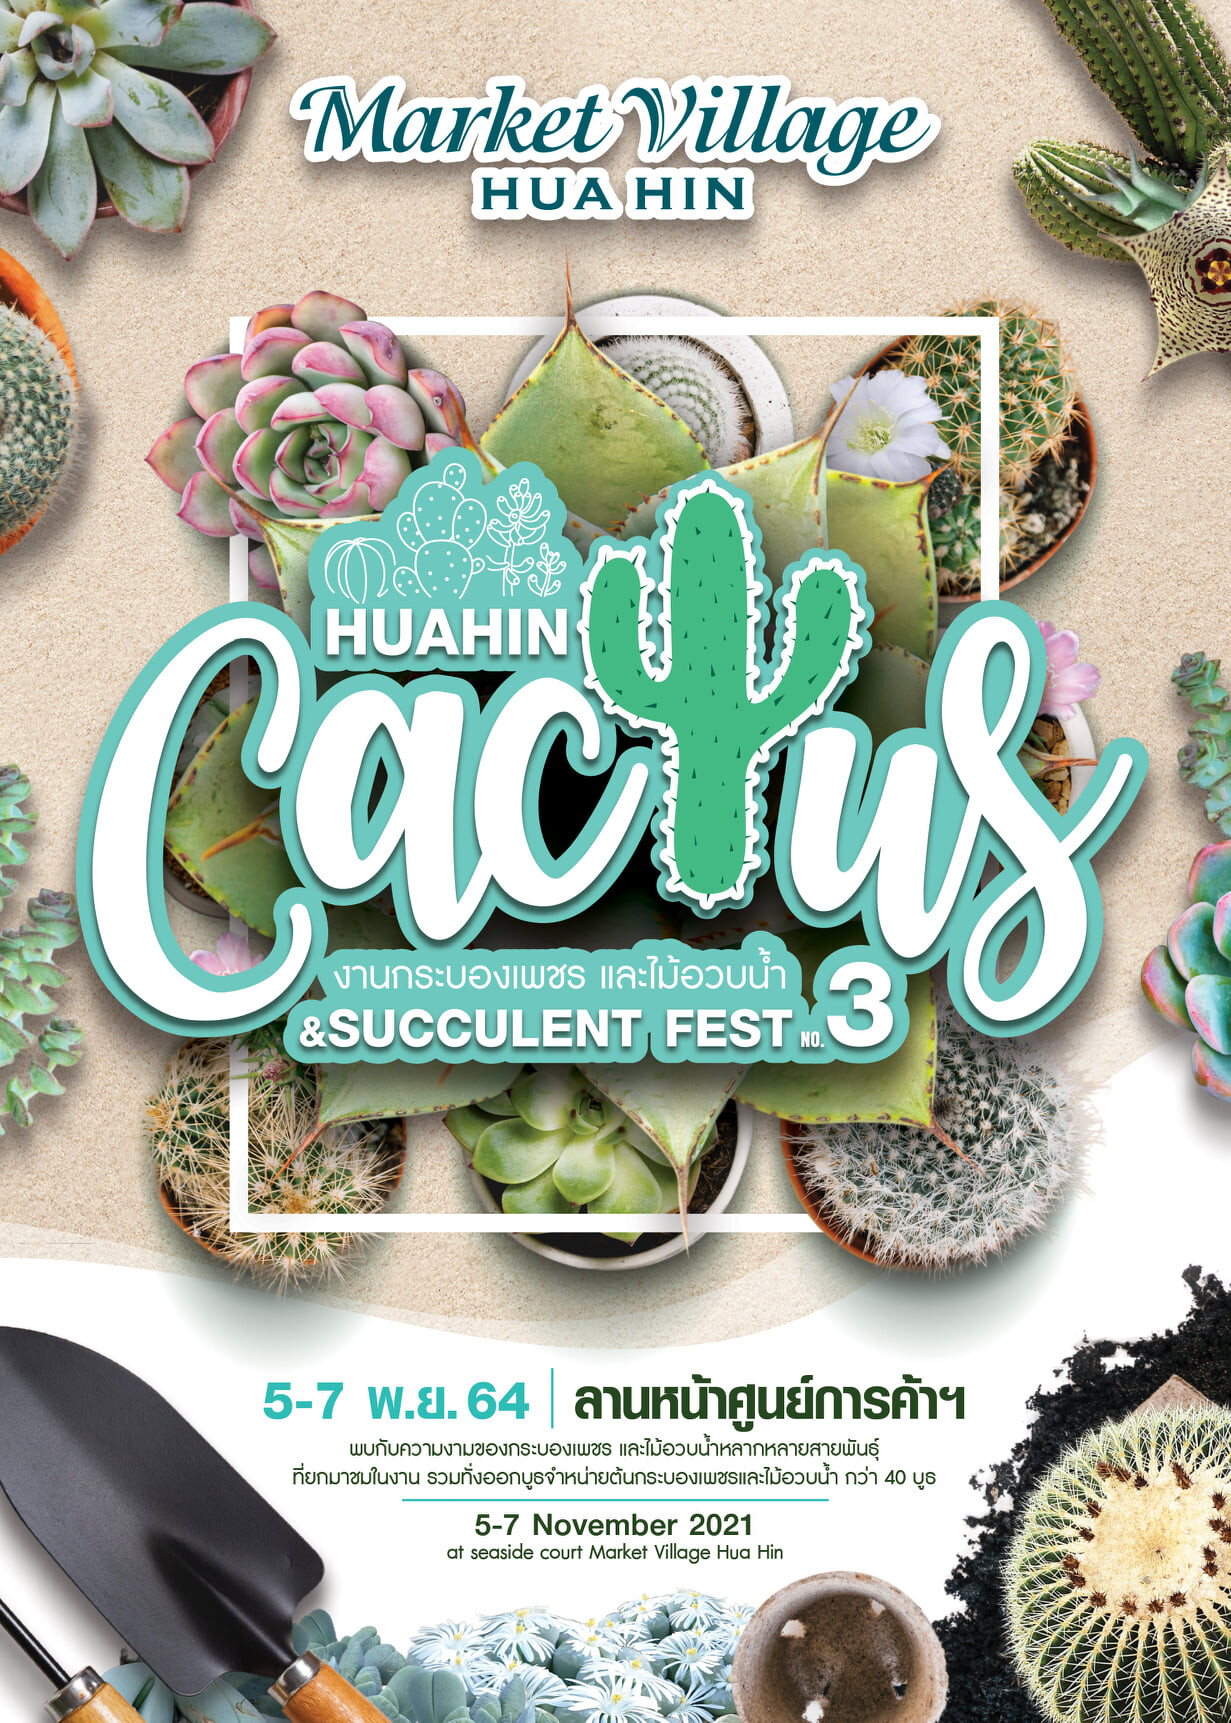 Hua Hin Cactus and Succulent Fest. 2021